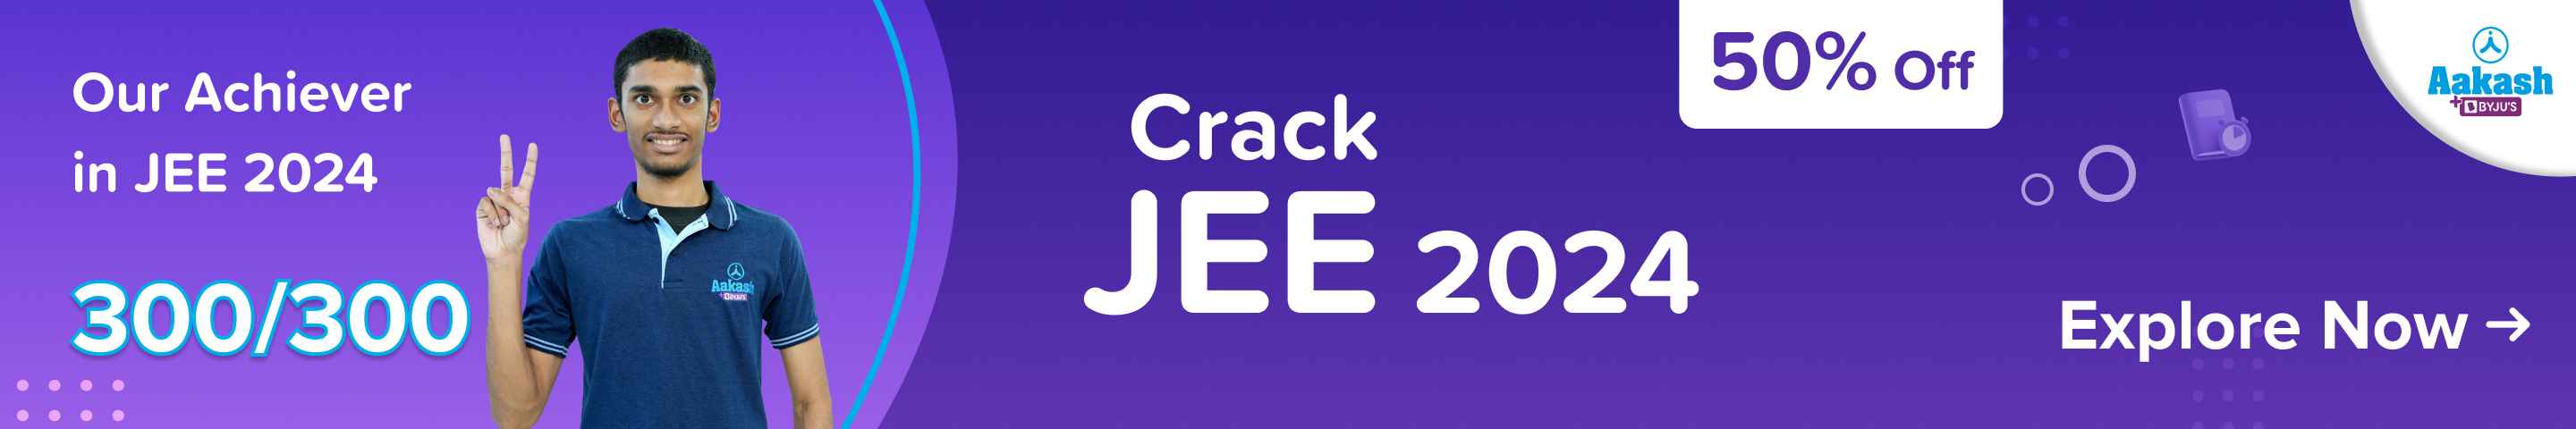 Crack JEE 2024